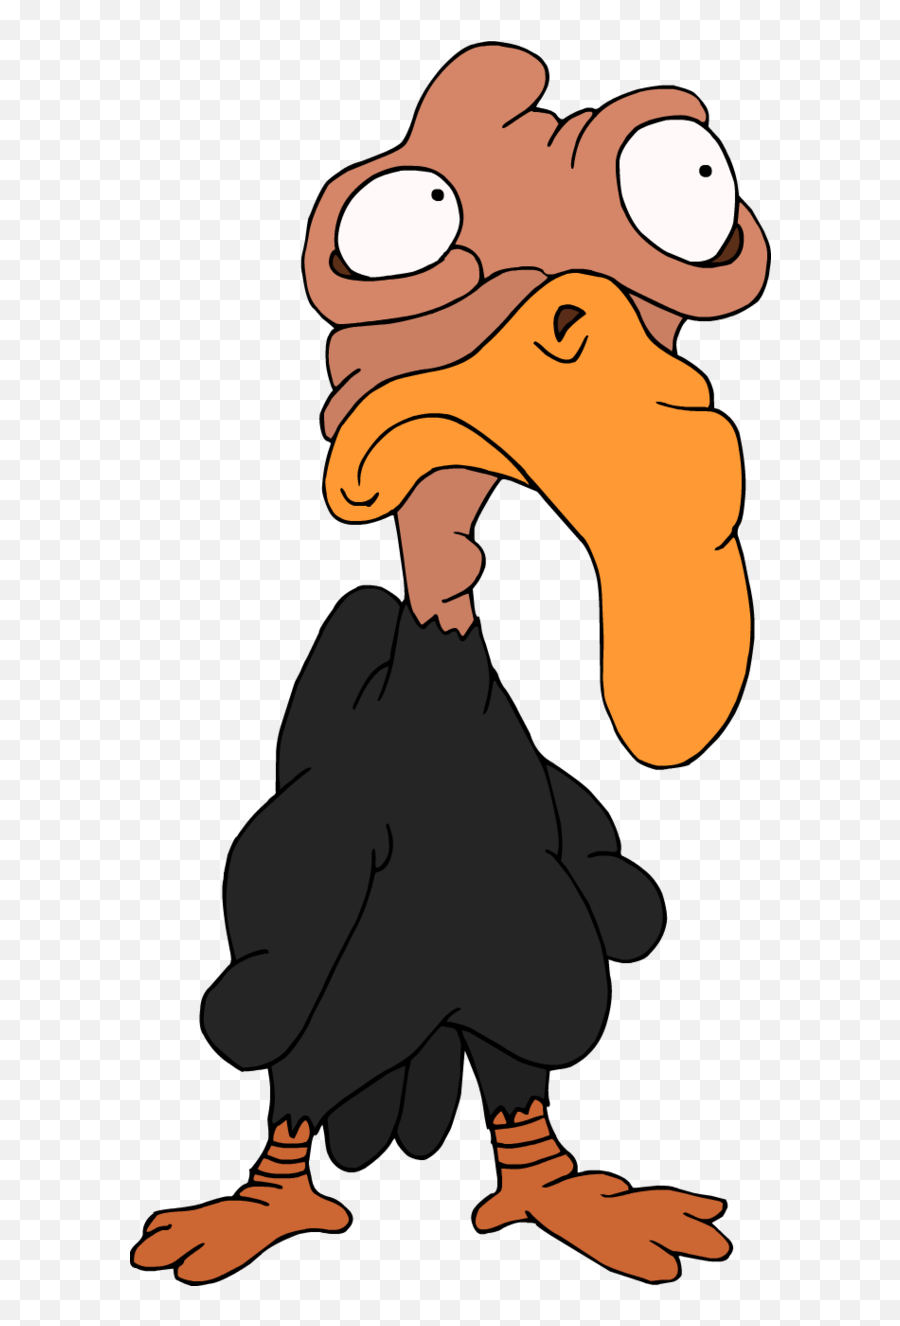 Ugly Duckling By Grimsrudberkowitz - Ugly Duck Cartoon Ugly Duck Cartoon Png,Duck Cartoon Png